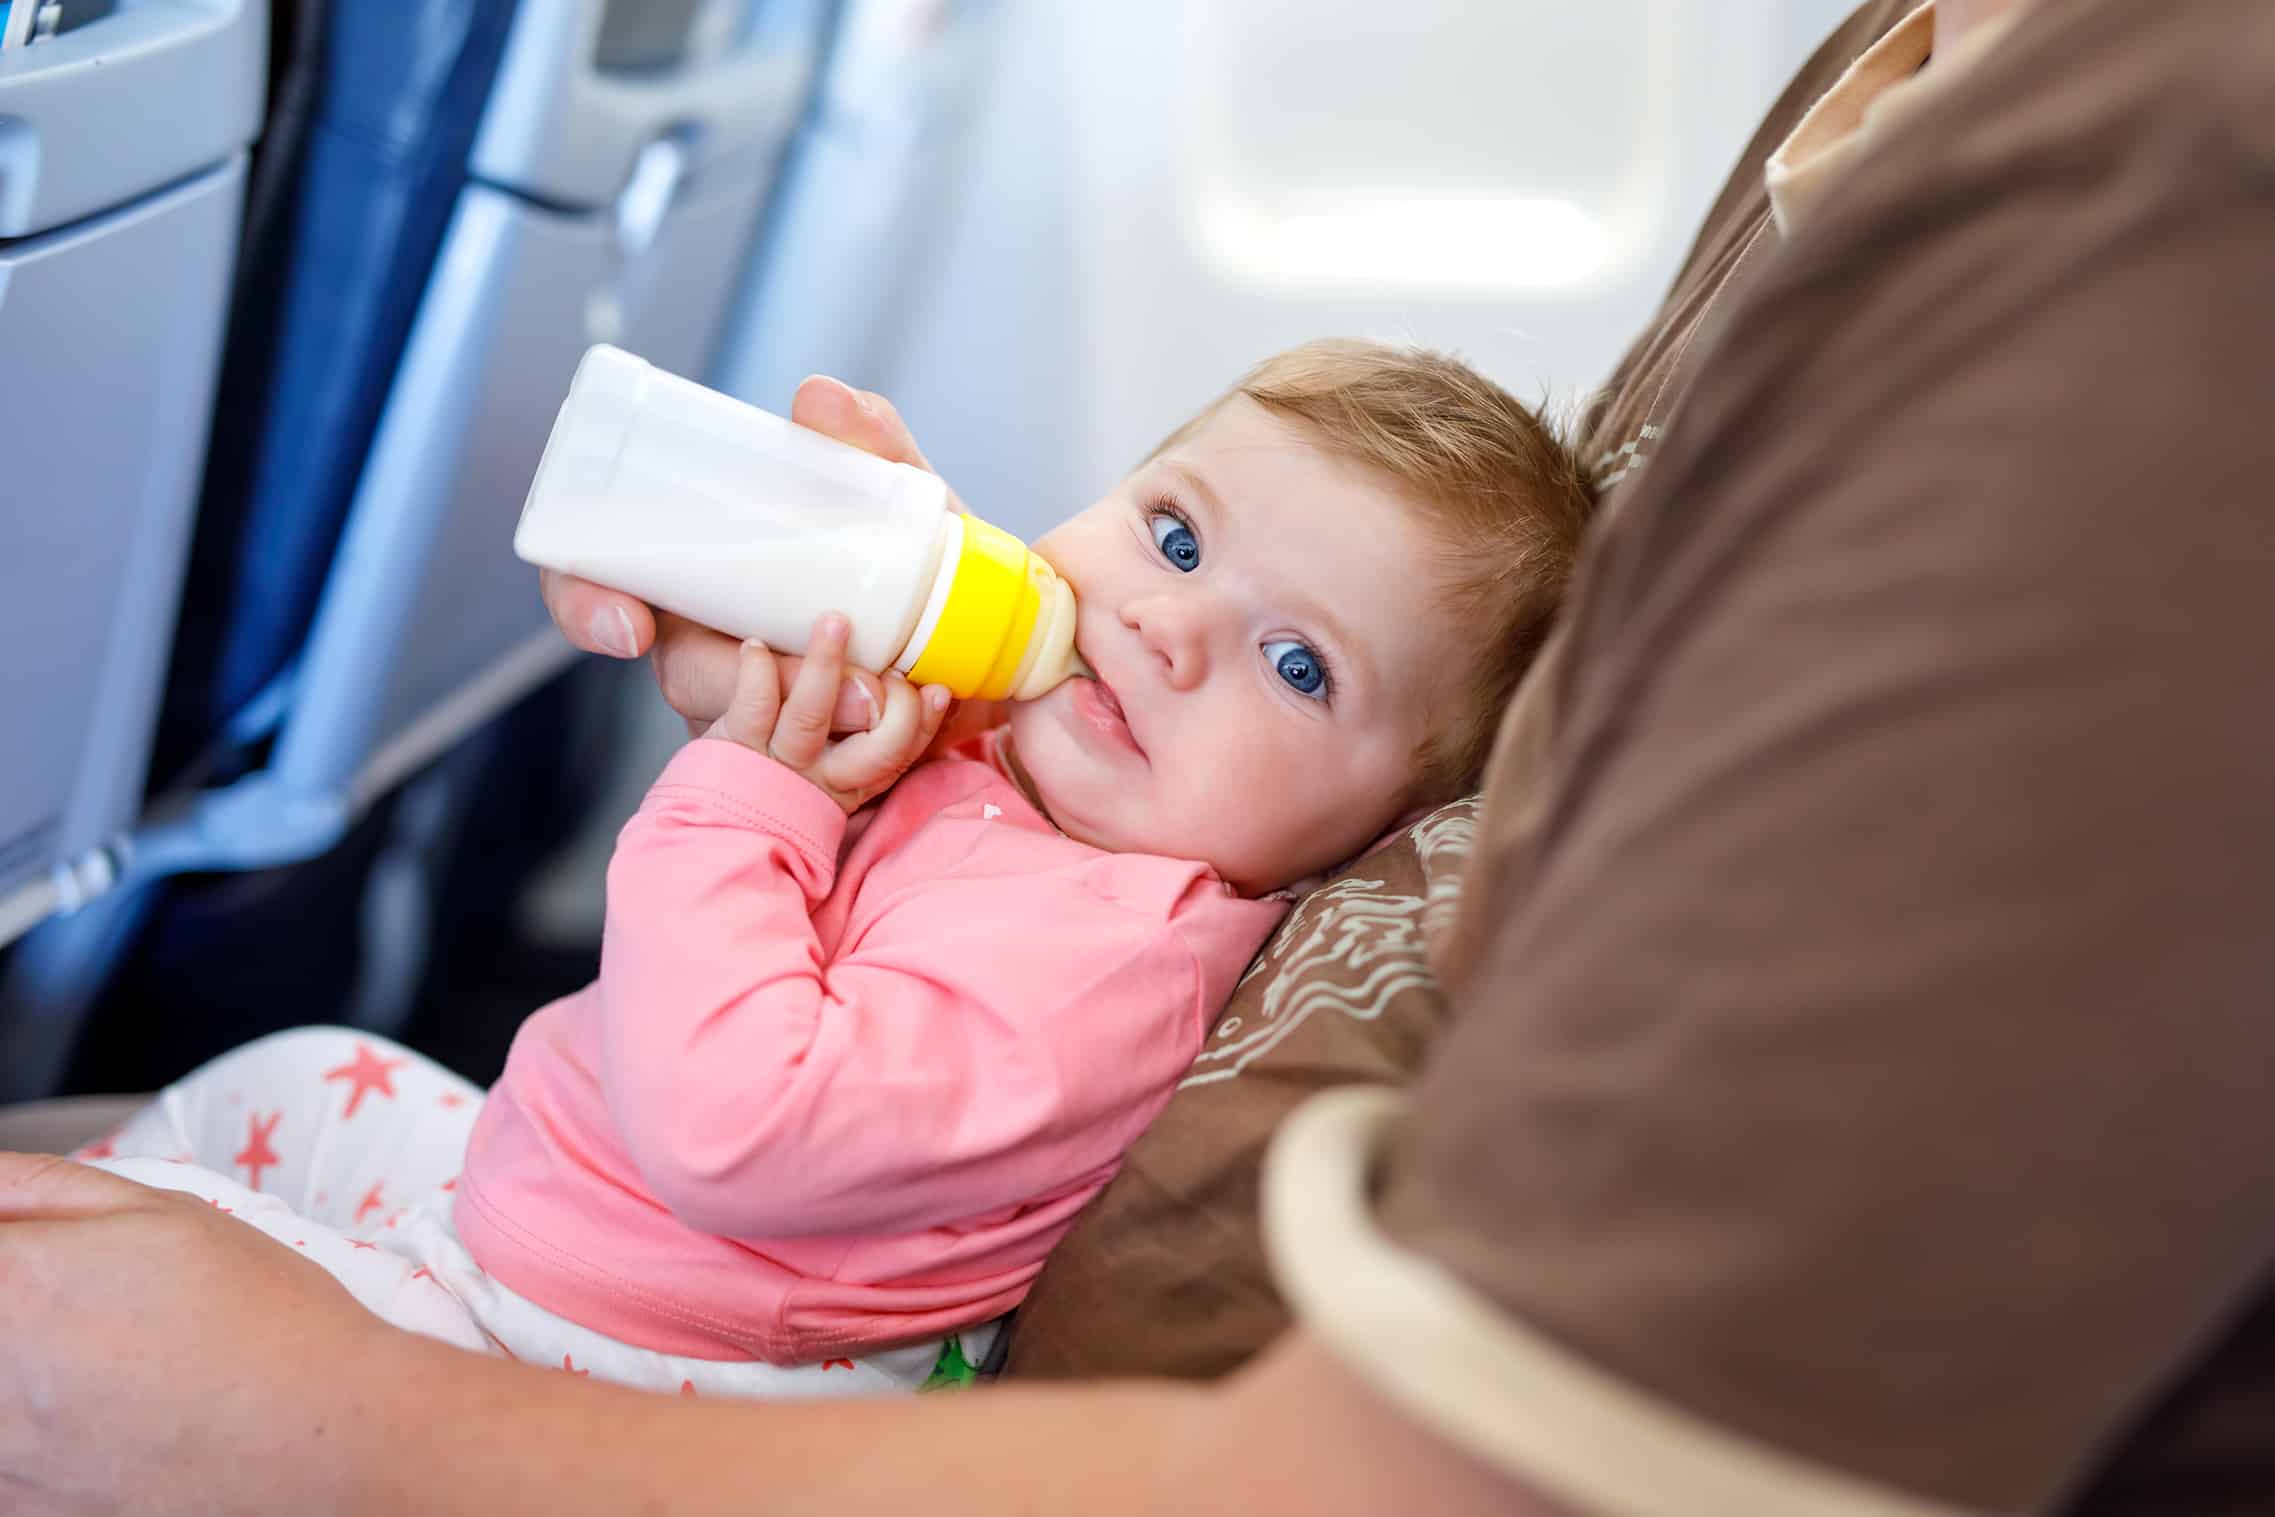 Lap child on plane drinking bottle